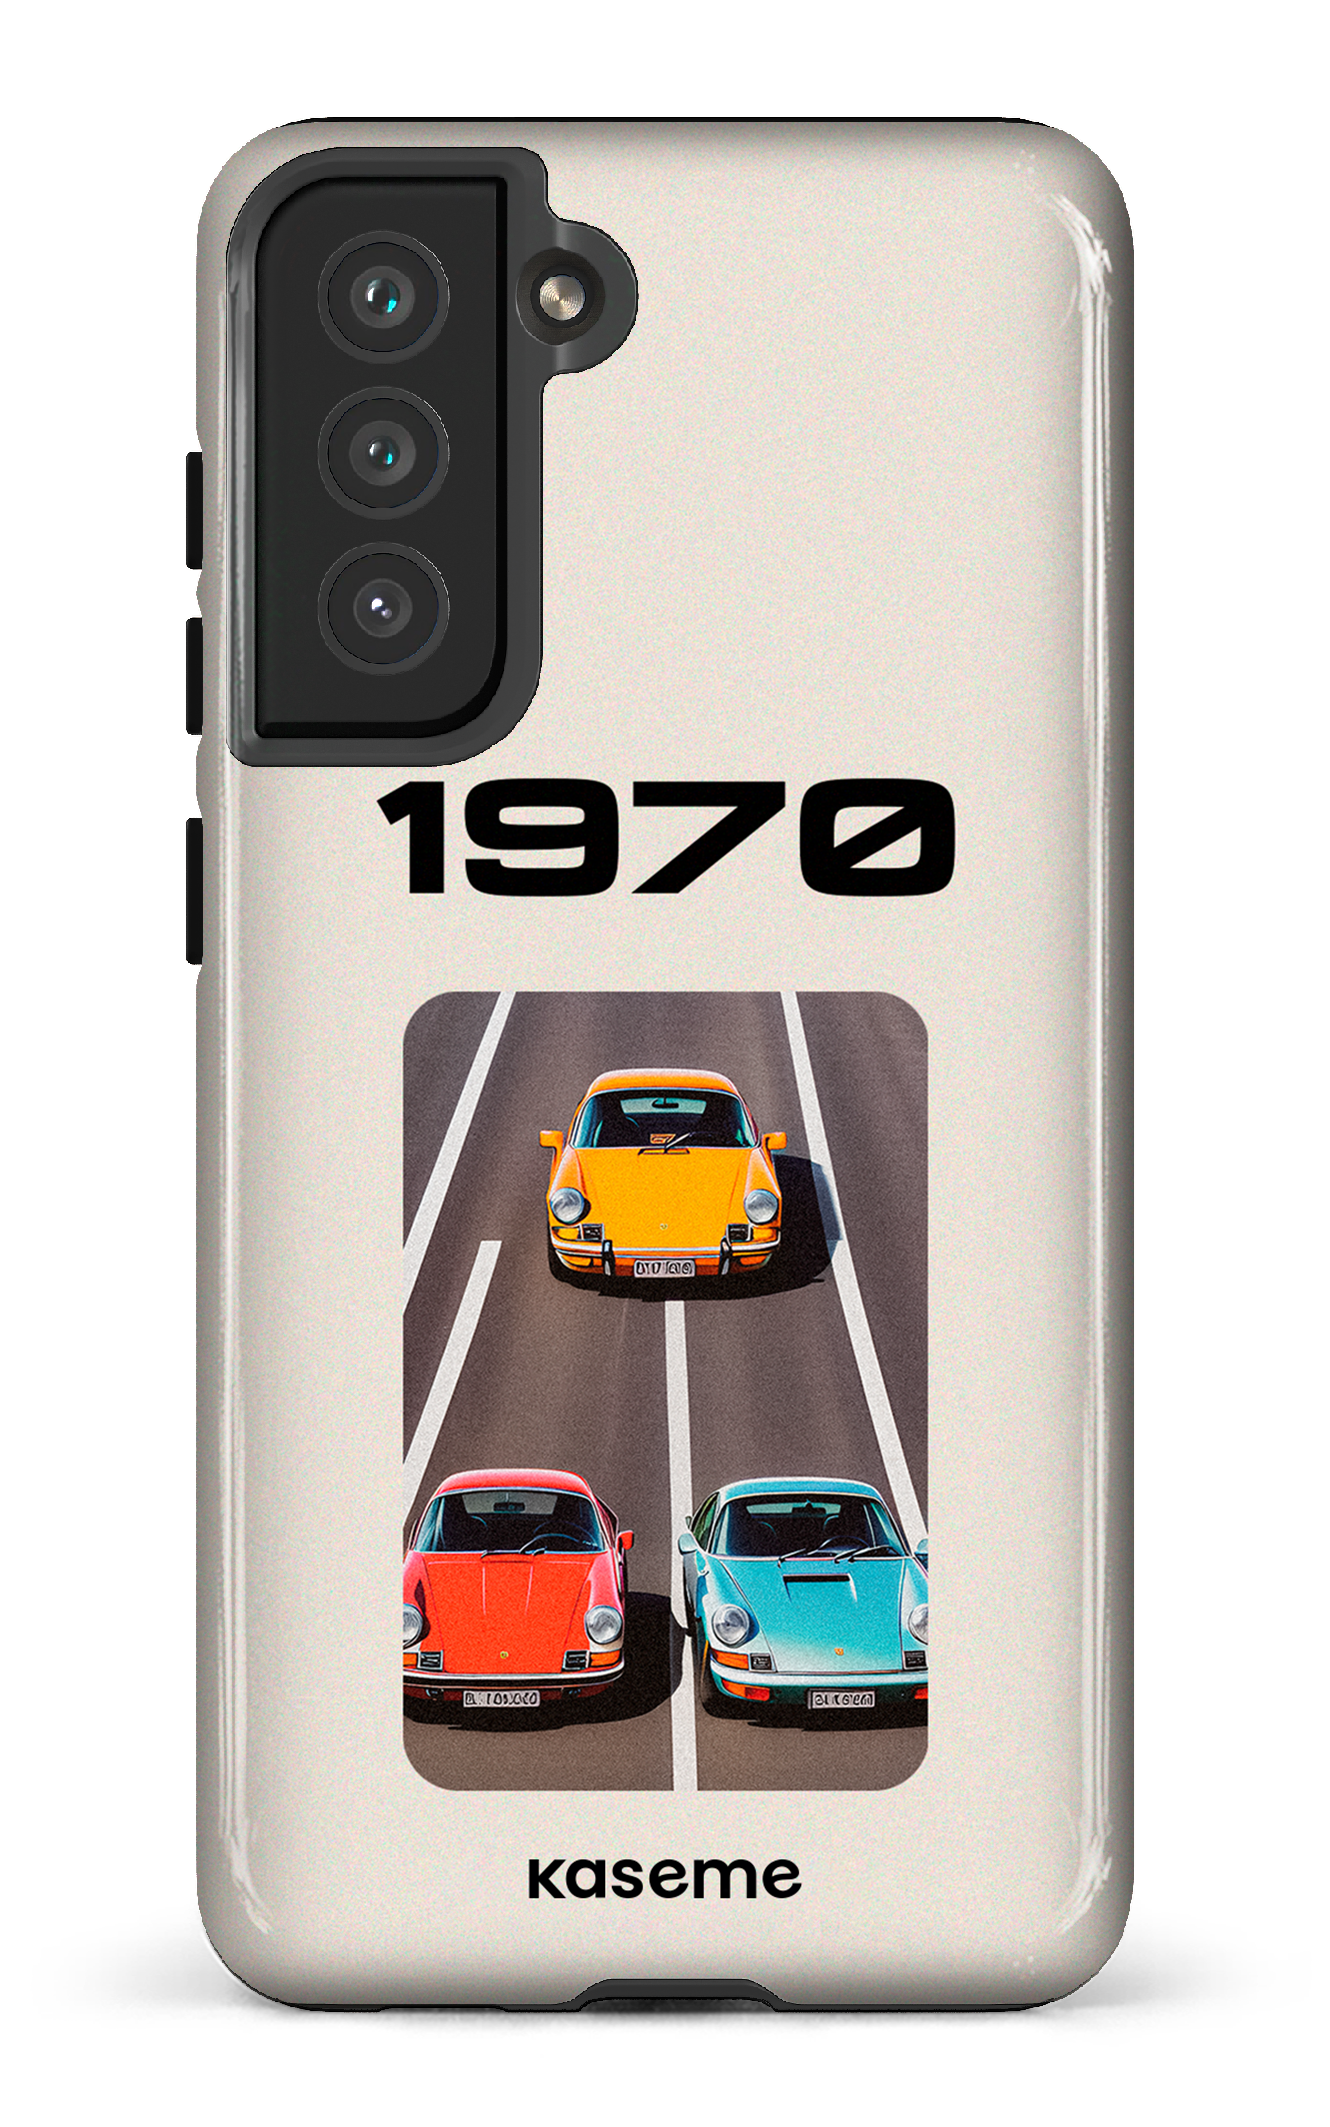 The 1970 - Galaxy S21 FE